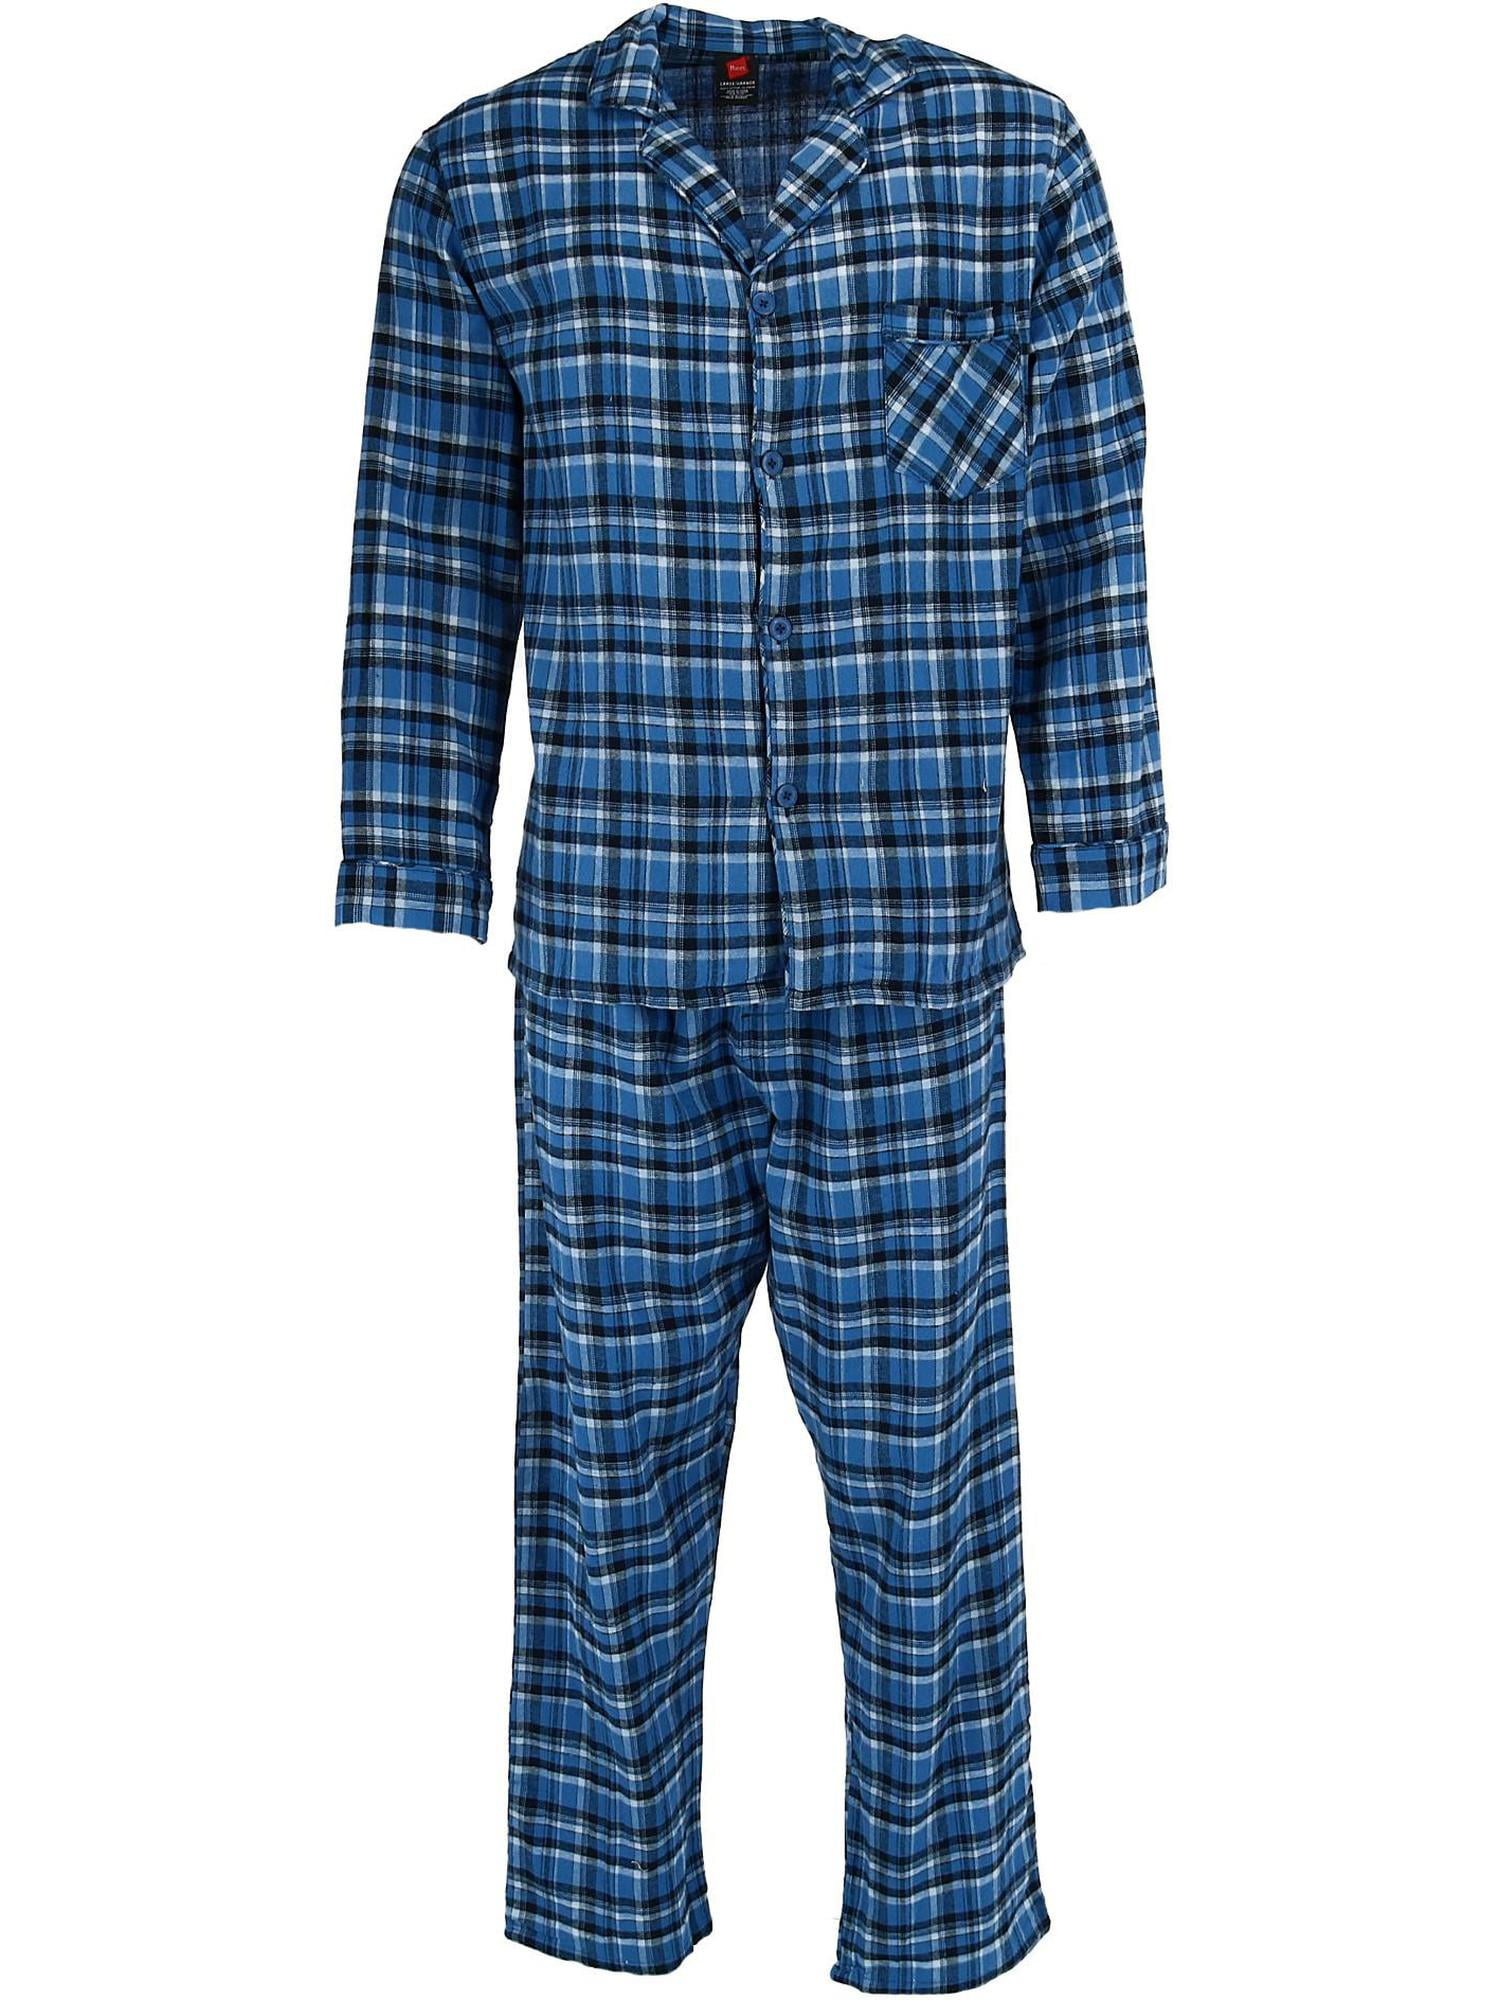 Hanes Cotton Flannel Pajama Set (Men's) - Walmart.com